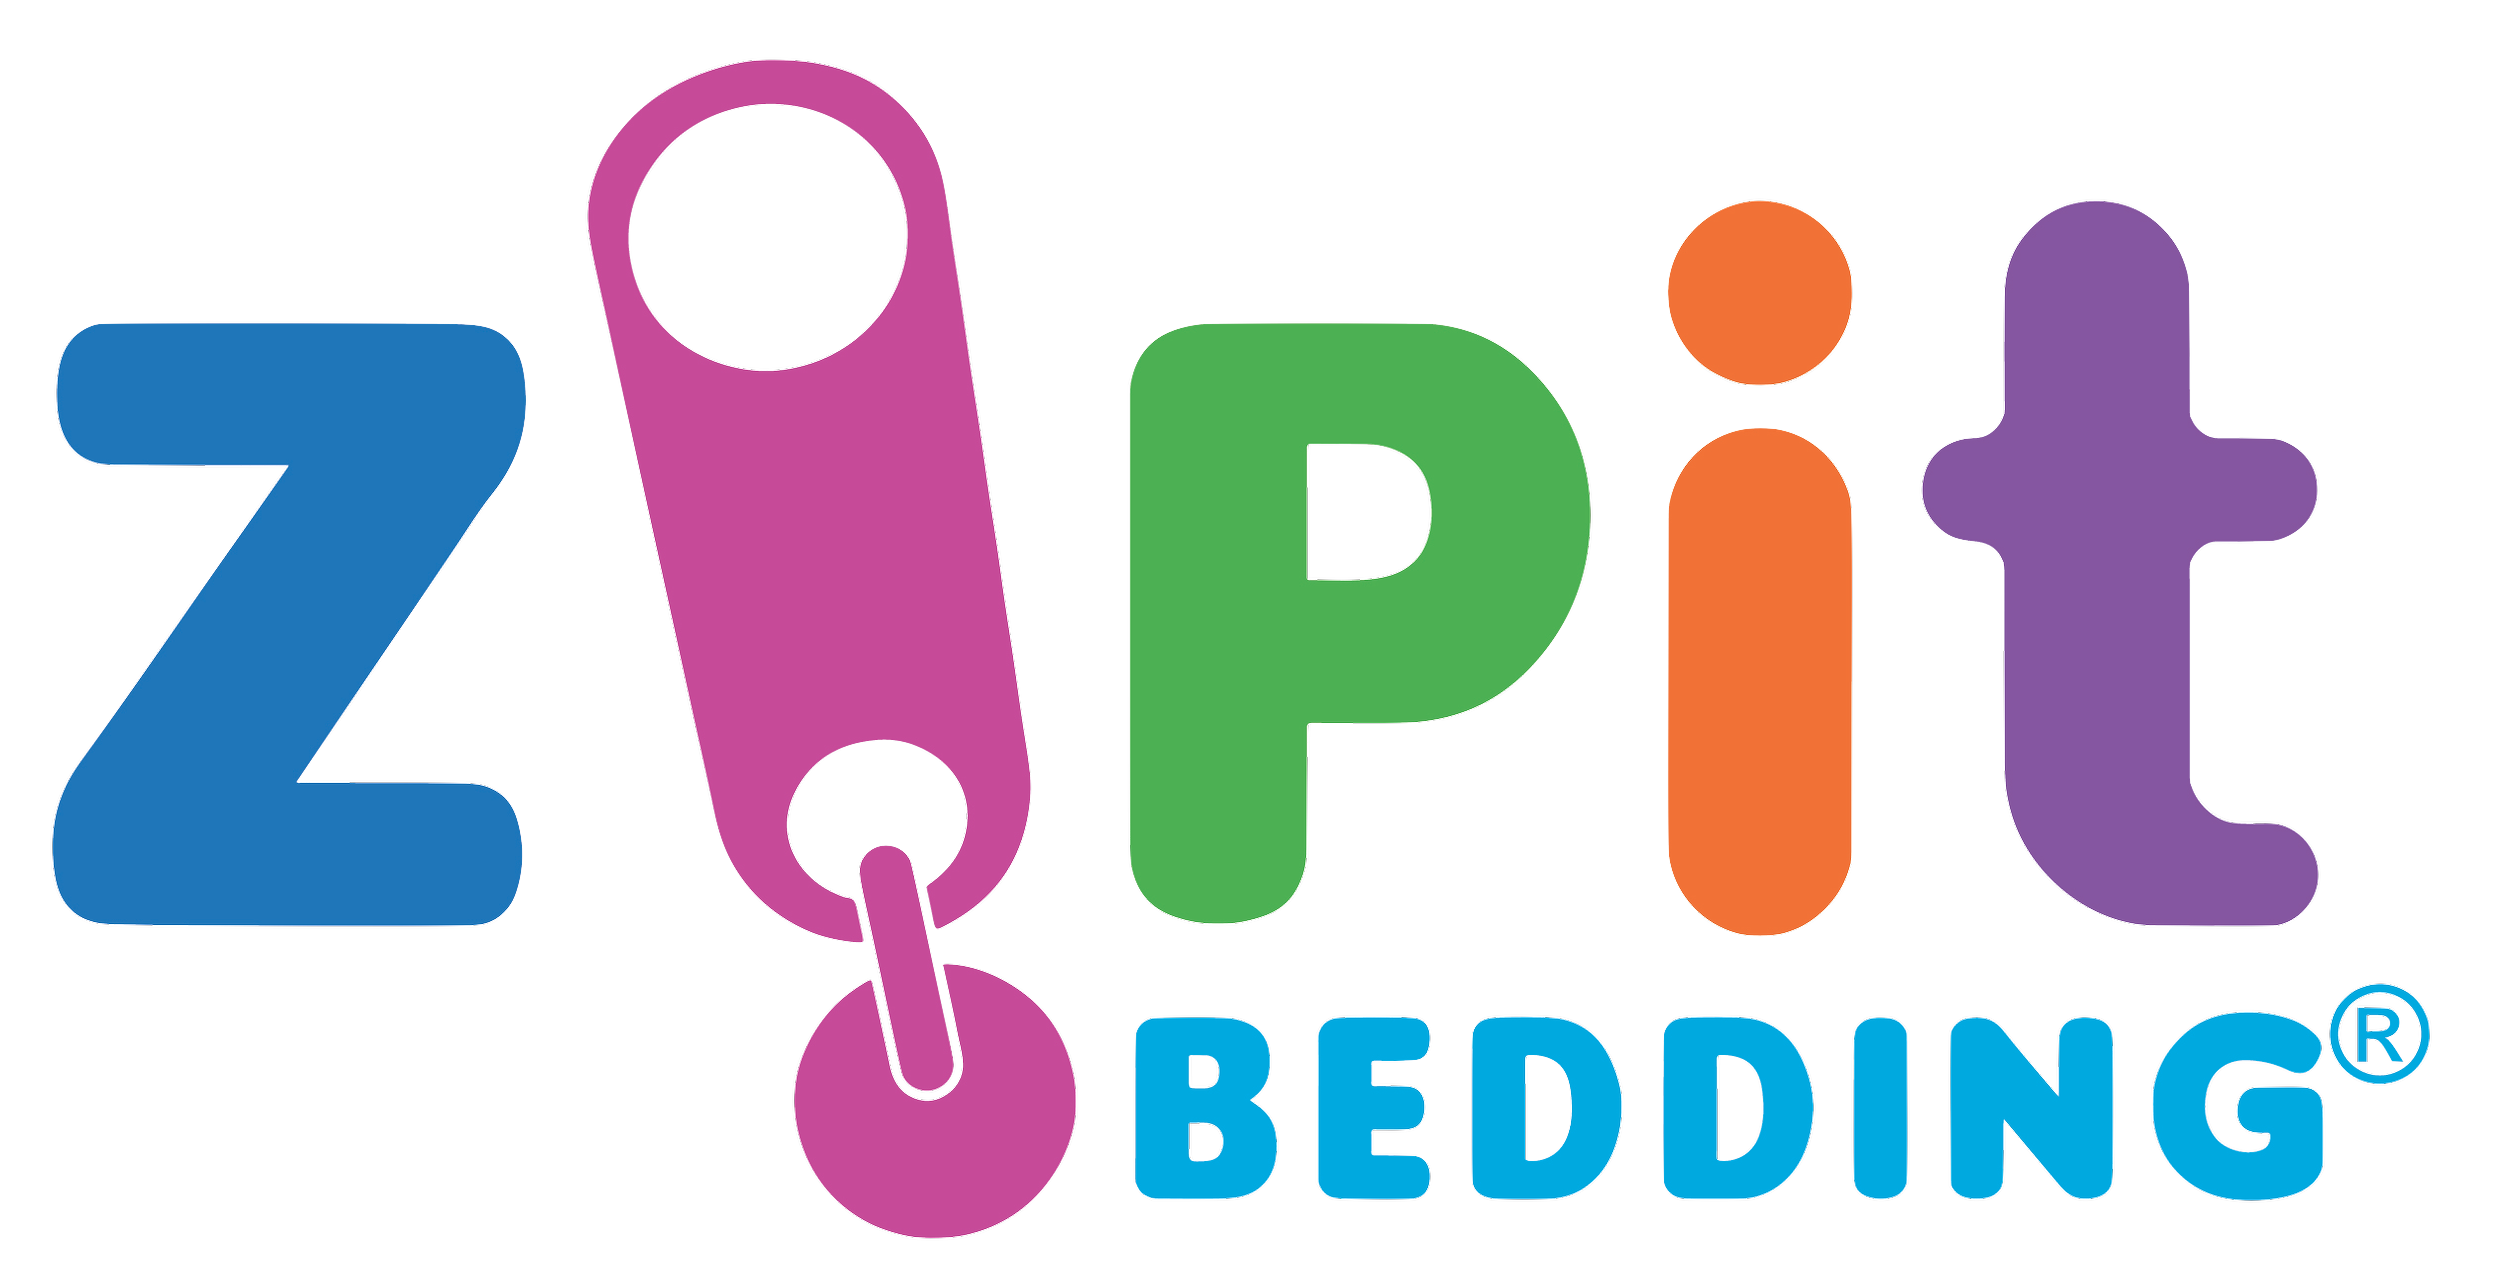 Zipit bedding, Bedding, Zipit Bedding Twin Set